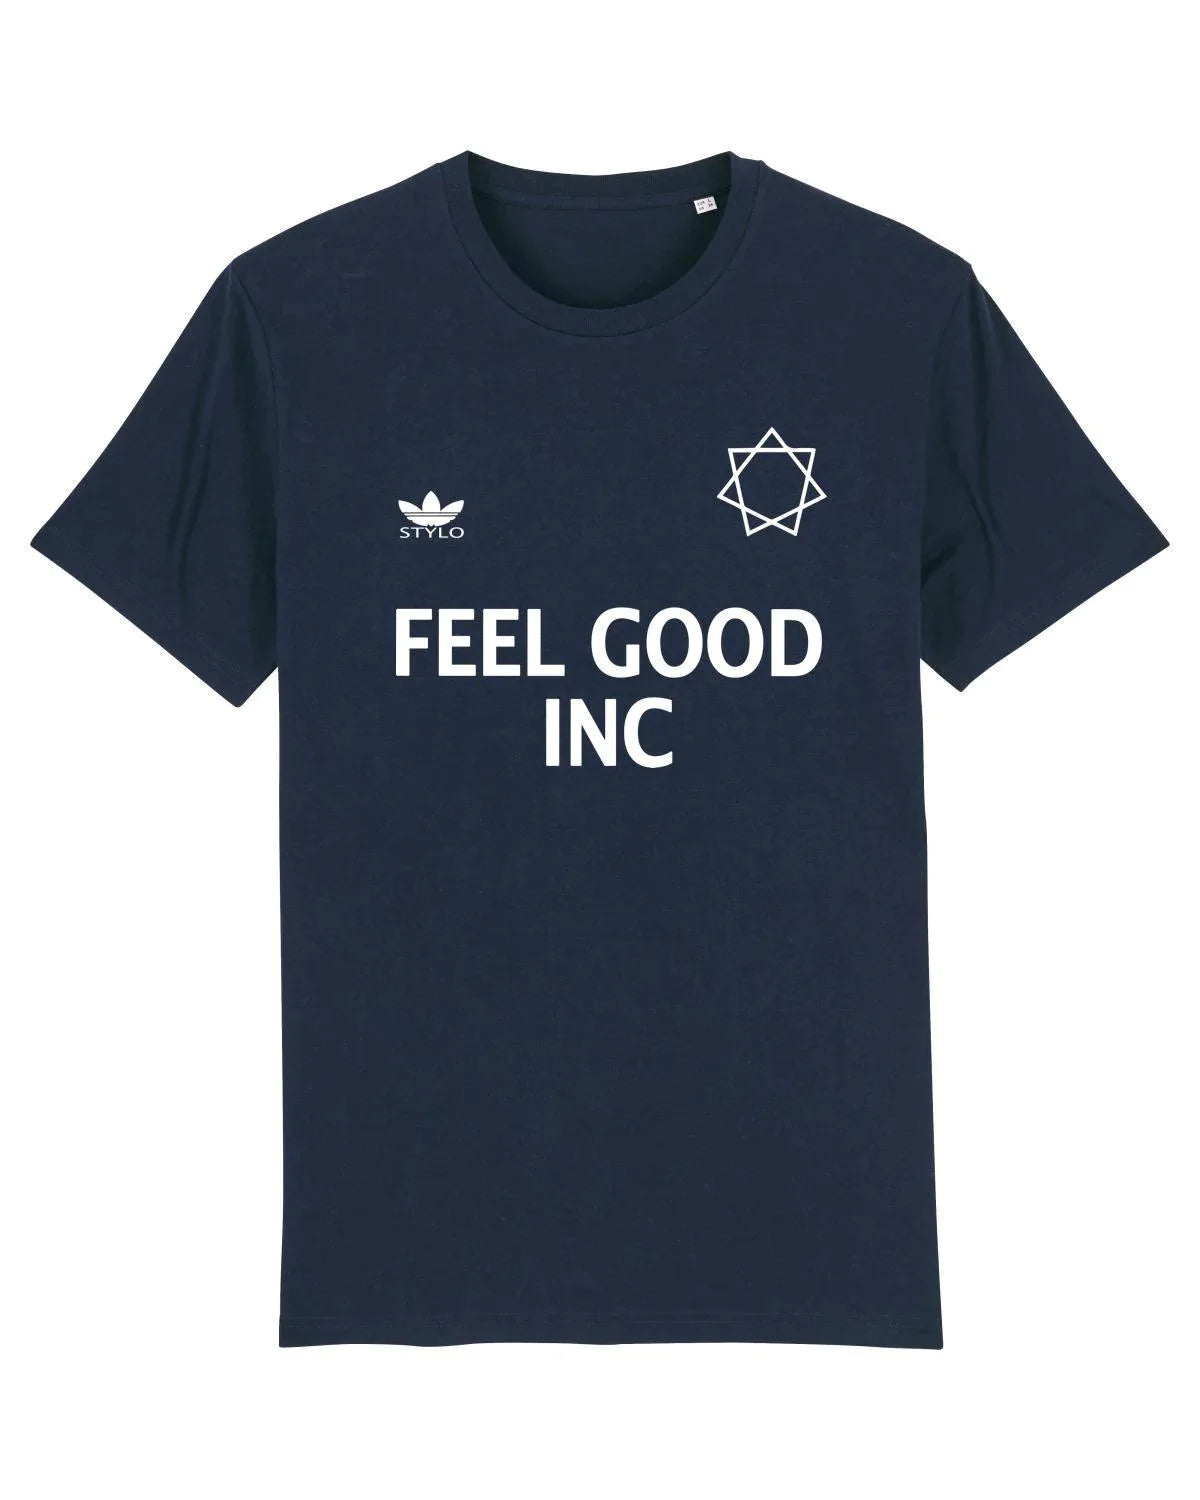 FEEL GOOD INC: T-Shirt Inspired by Gorillaz, Damon Albarn & Football - SOUND IS COLOUR